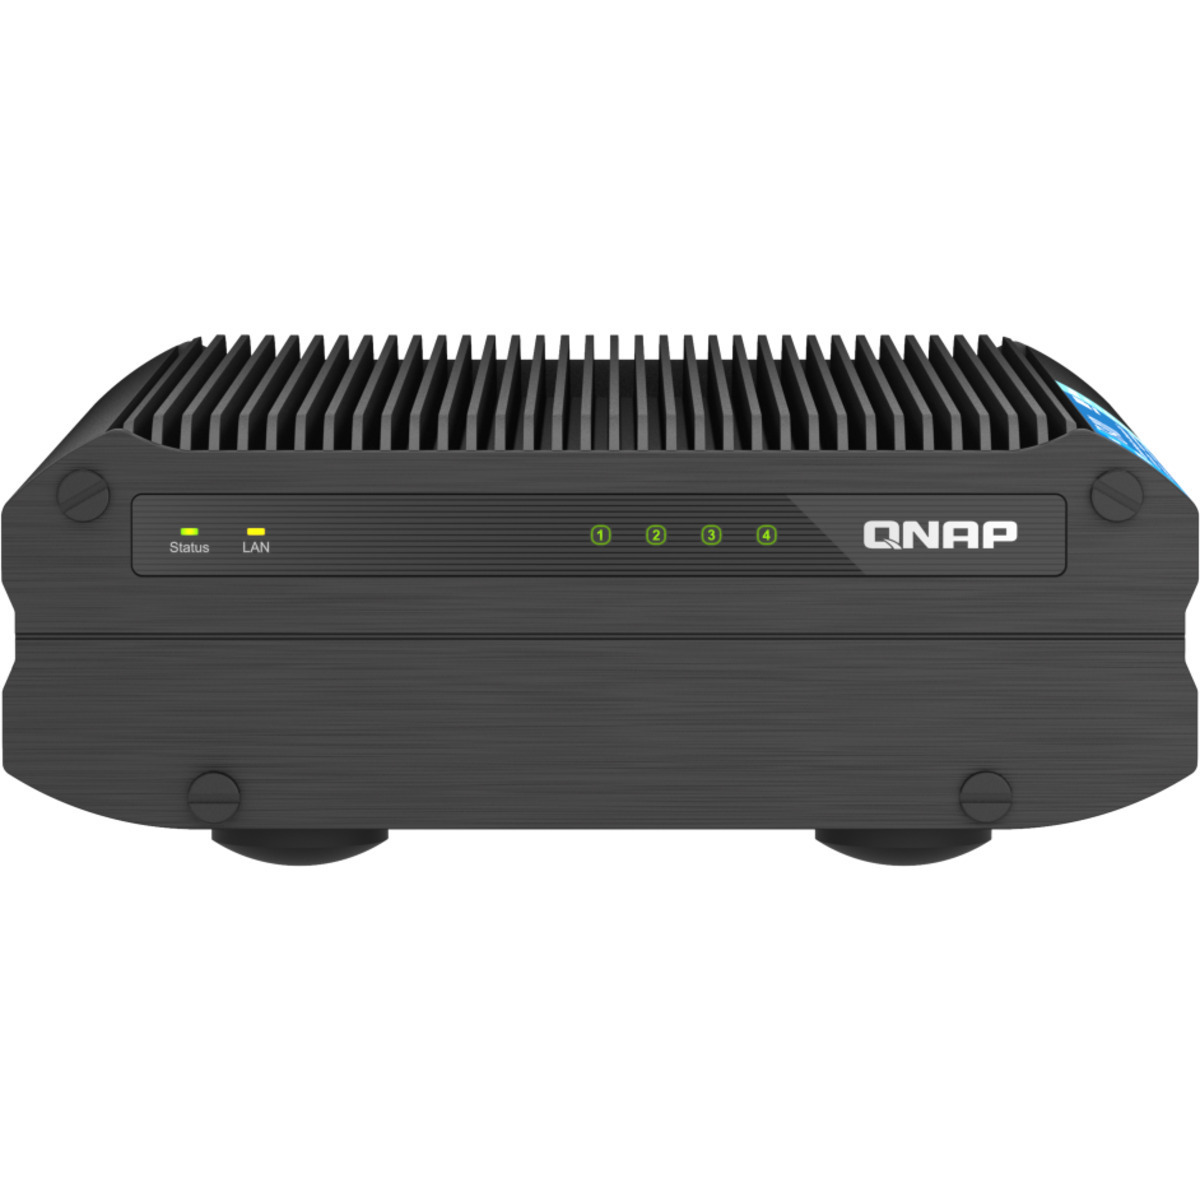 QNAP TS-i410X 12tb 4-Bay Desktop Multimedia / Power User / Business NAS - Network Attached Storage Device 3x4tb Samsung 870 QVO MZ-77Q4T0 2.5 560/530MB/s SATA 6Gb/s SSD CONSUMER Class Drives Installed - Burn-In Tested TS-i410X